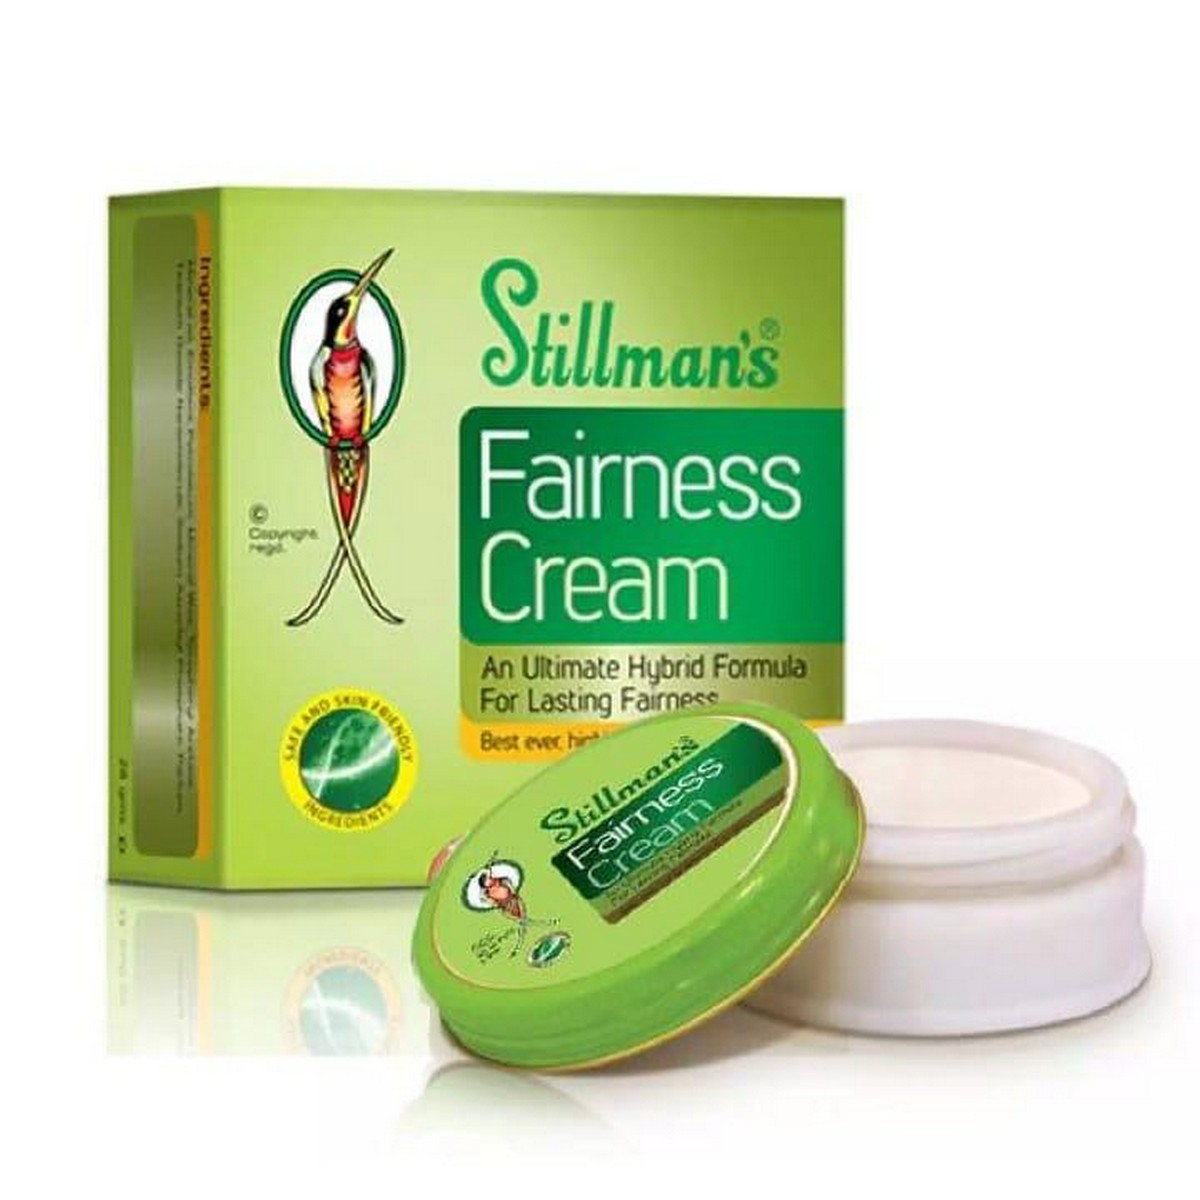 Stillman's Fairness Cream